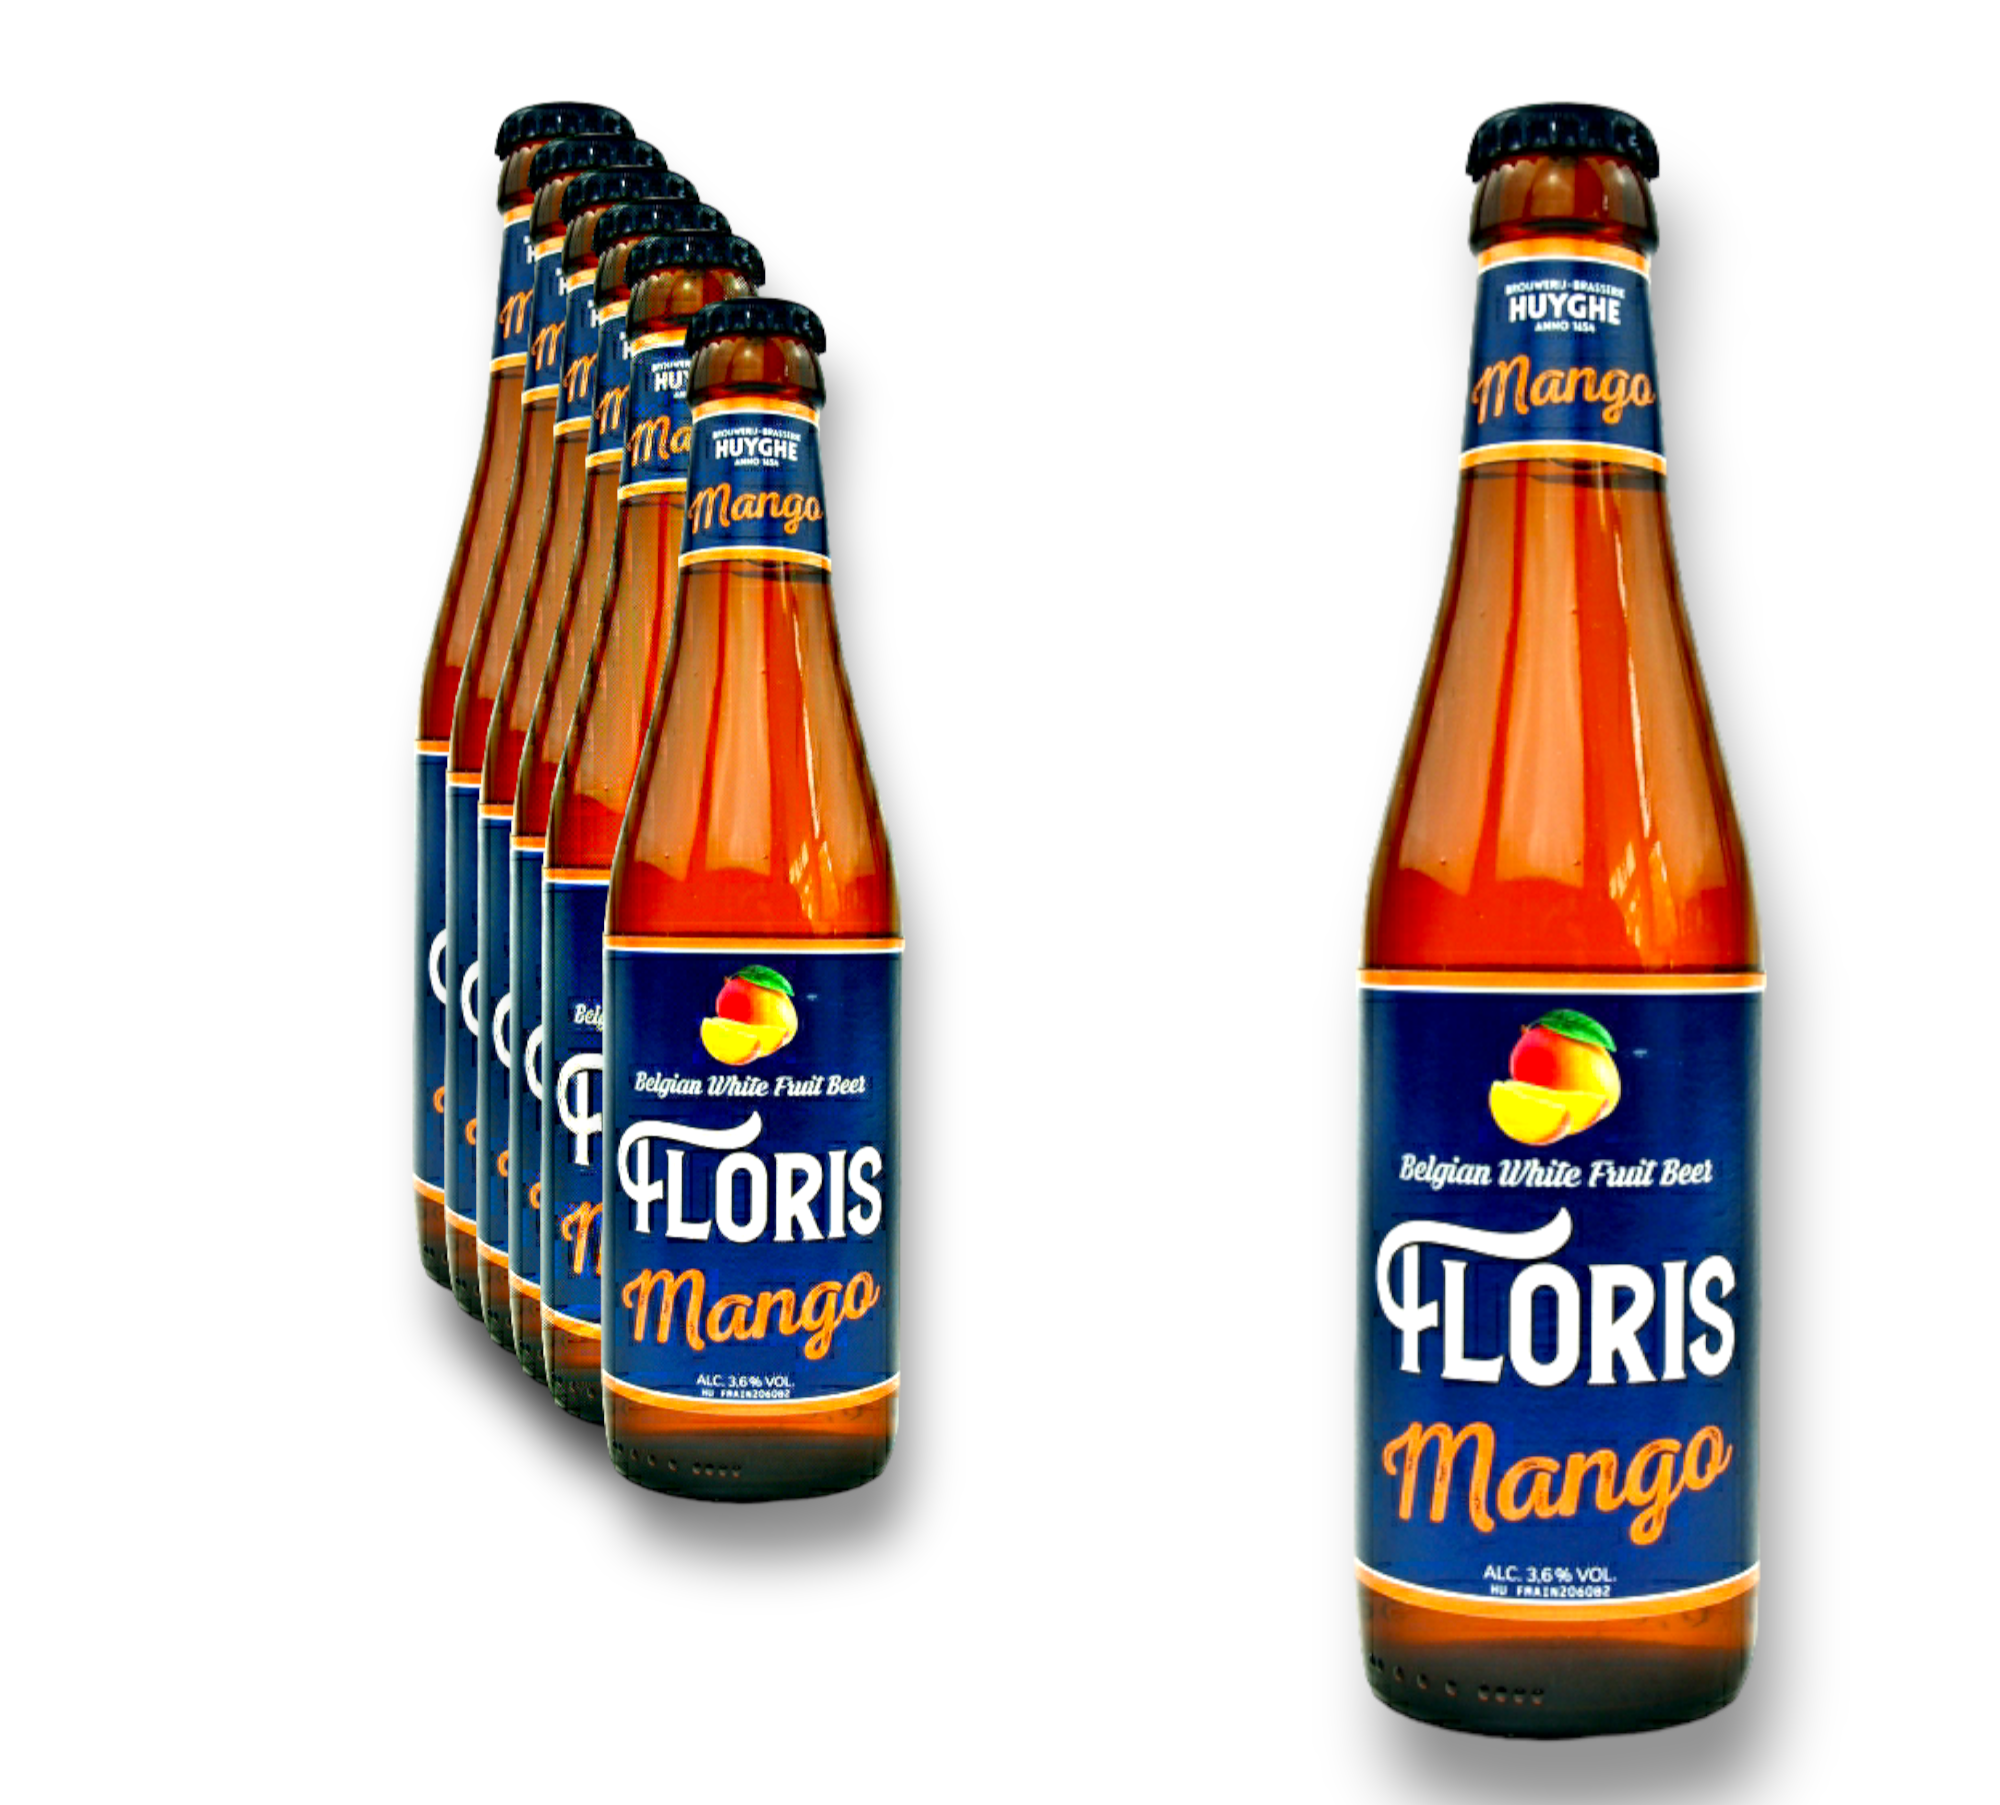 Floris Mango Bier 0,33l - Belgian White Fruit Beer - Mangobier aus Belgien mit 3,6% Vol.